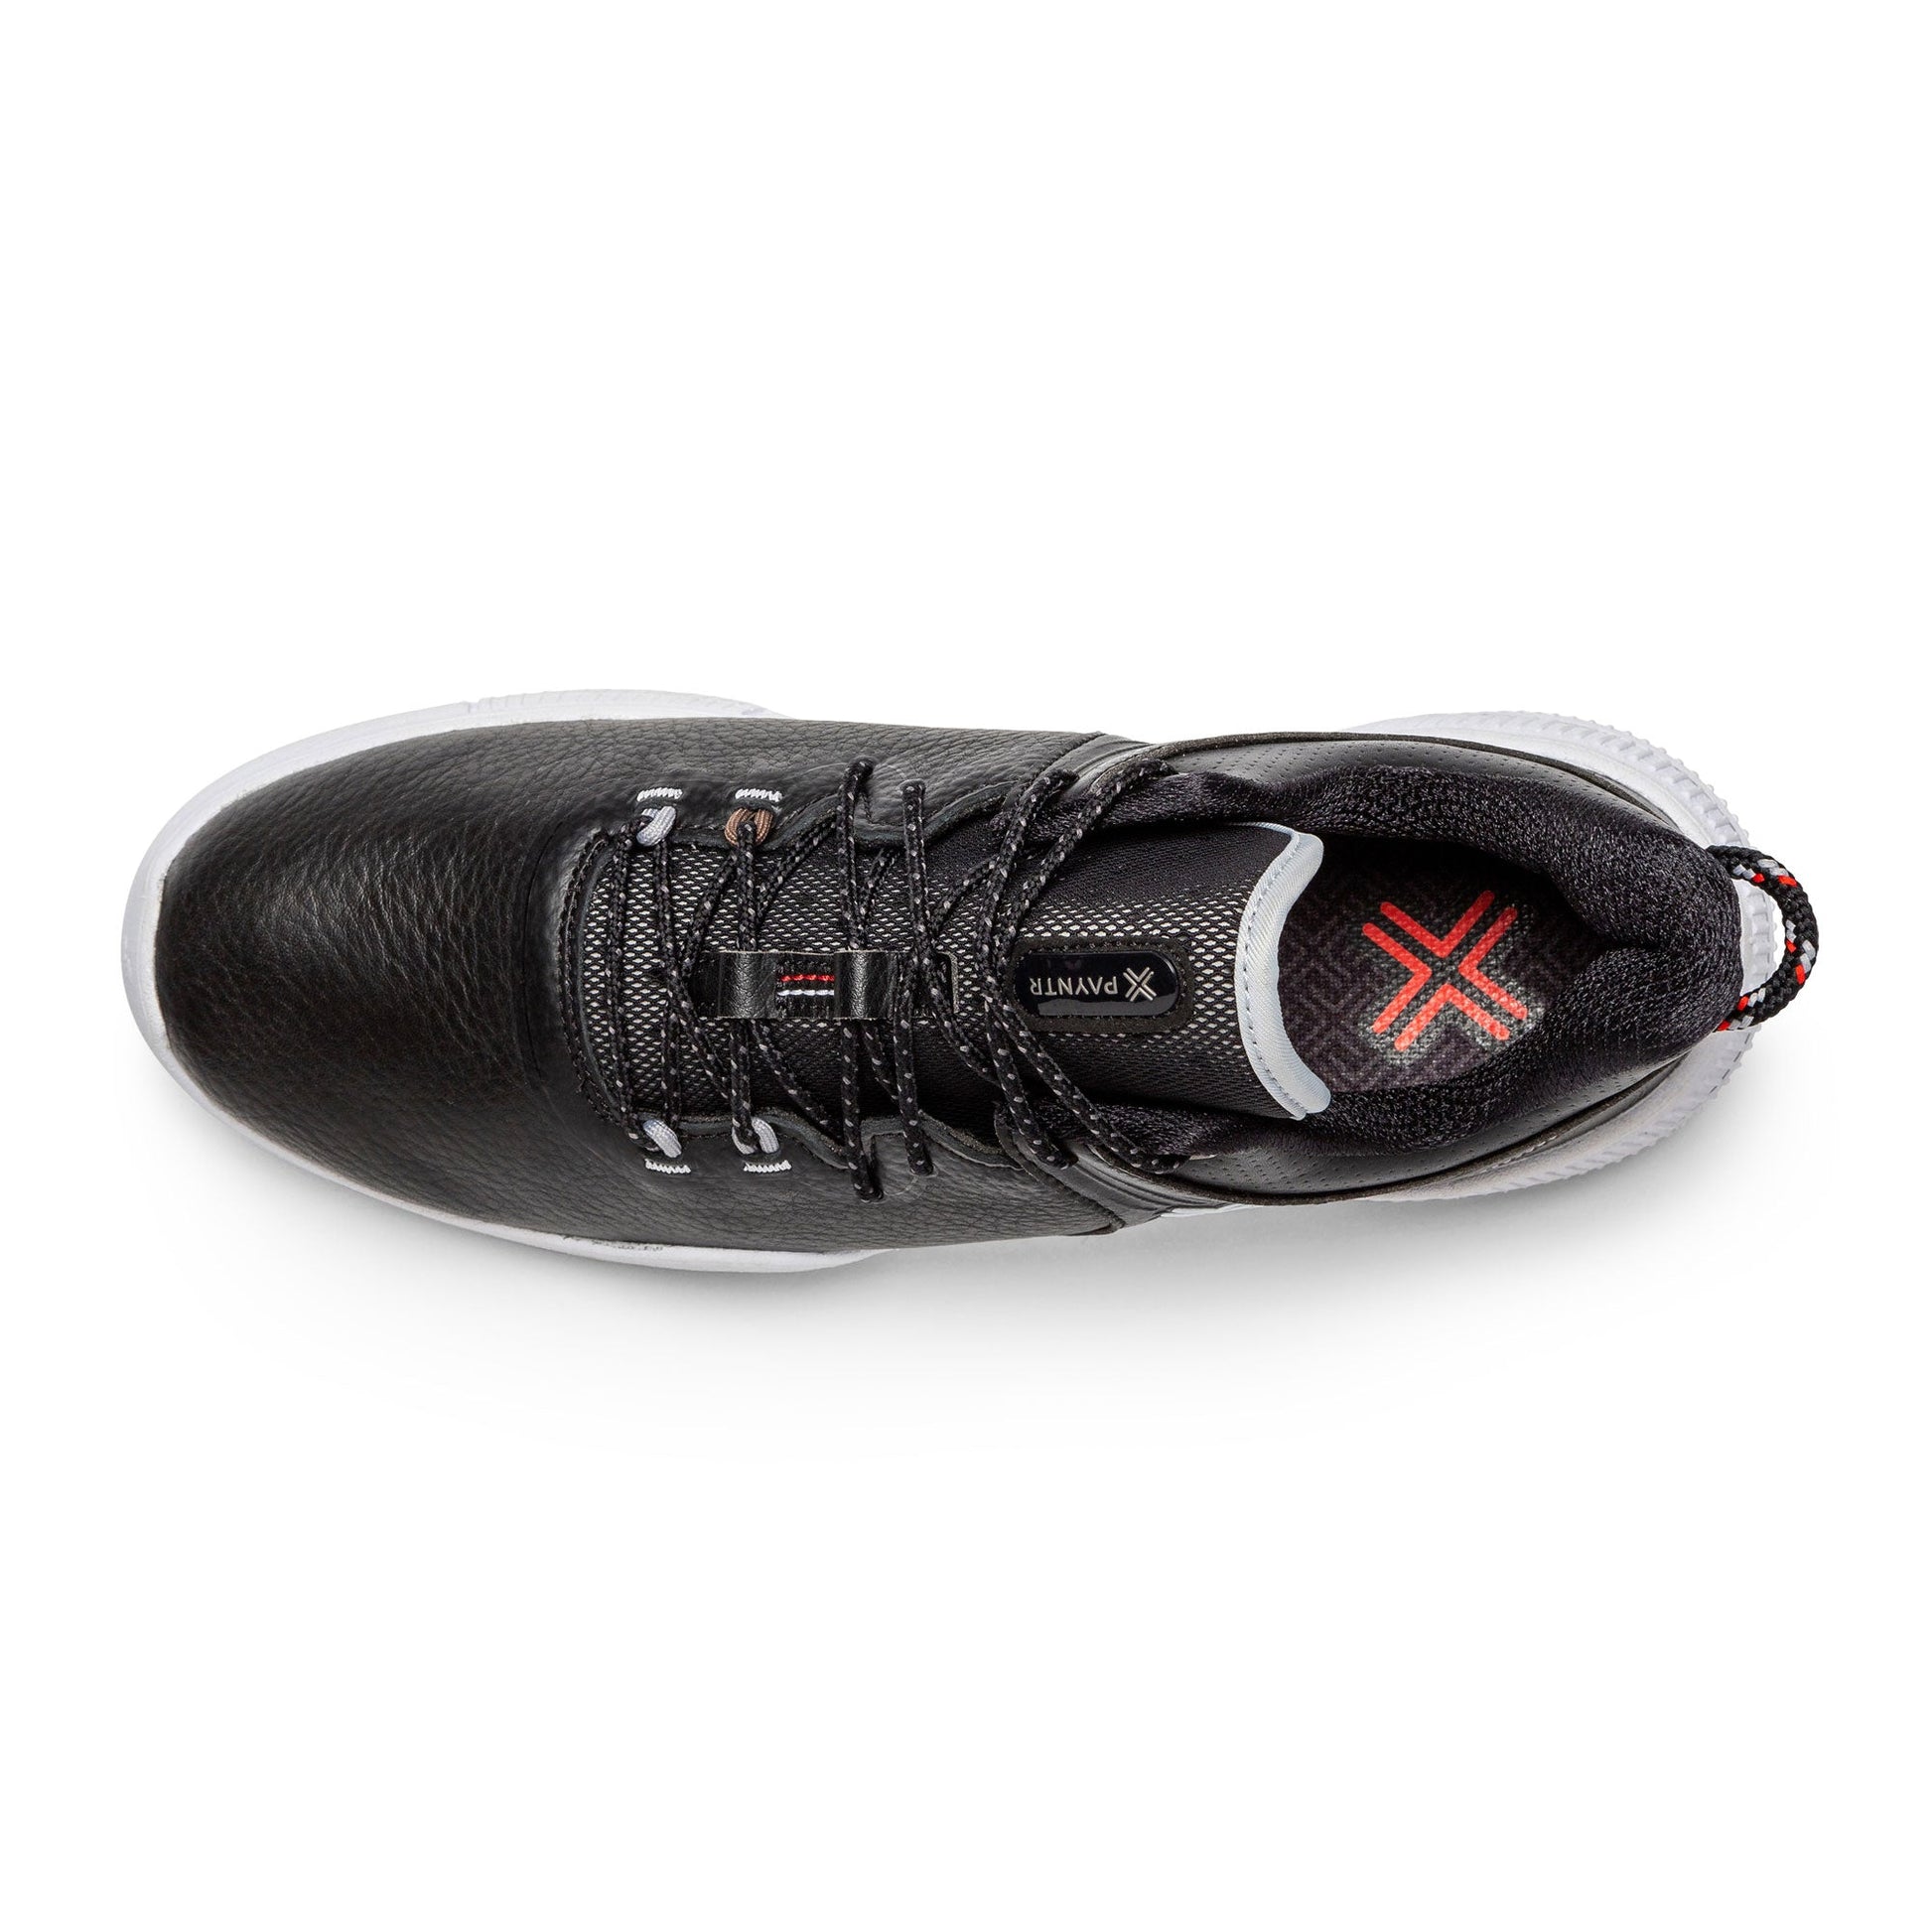 PAYNTR X-002 LE Spikeless Golf Shoe (Black) - Top